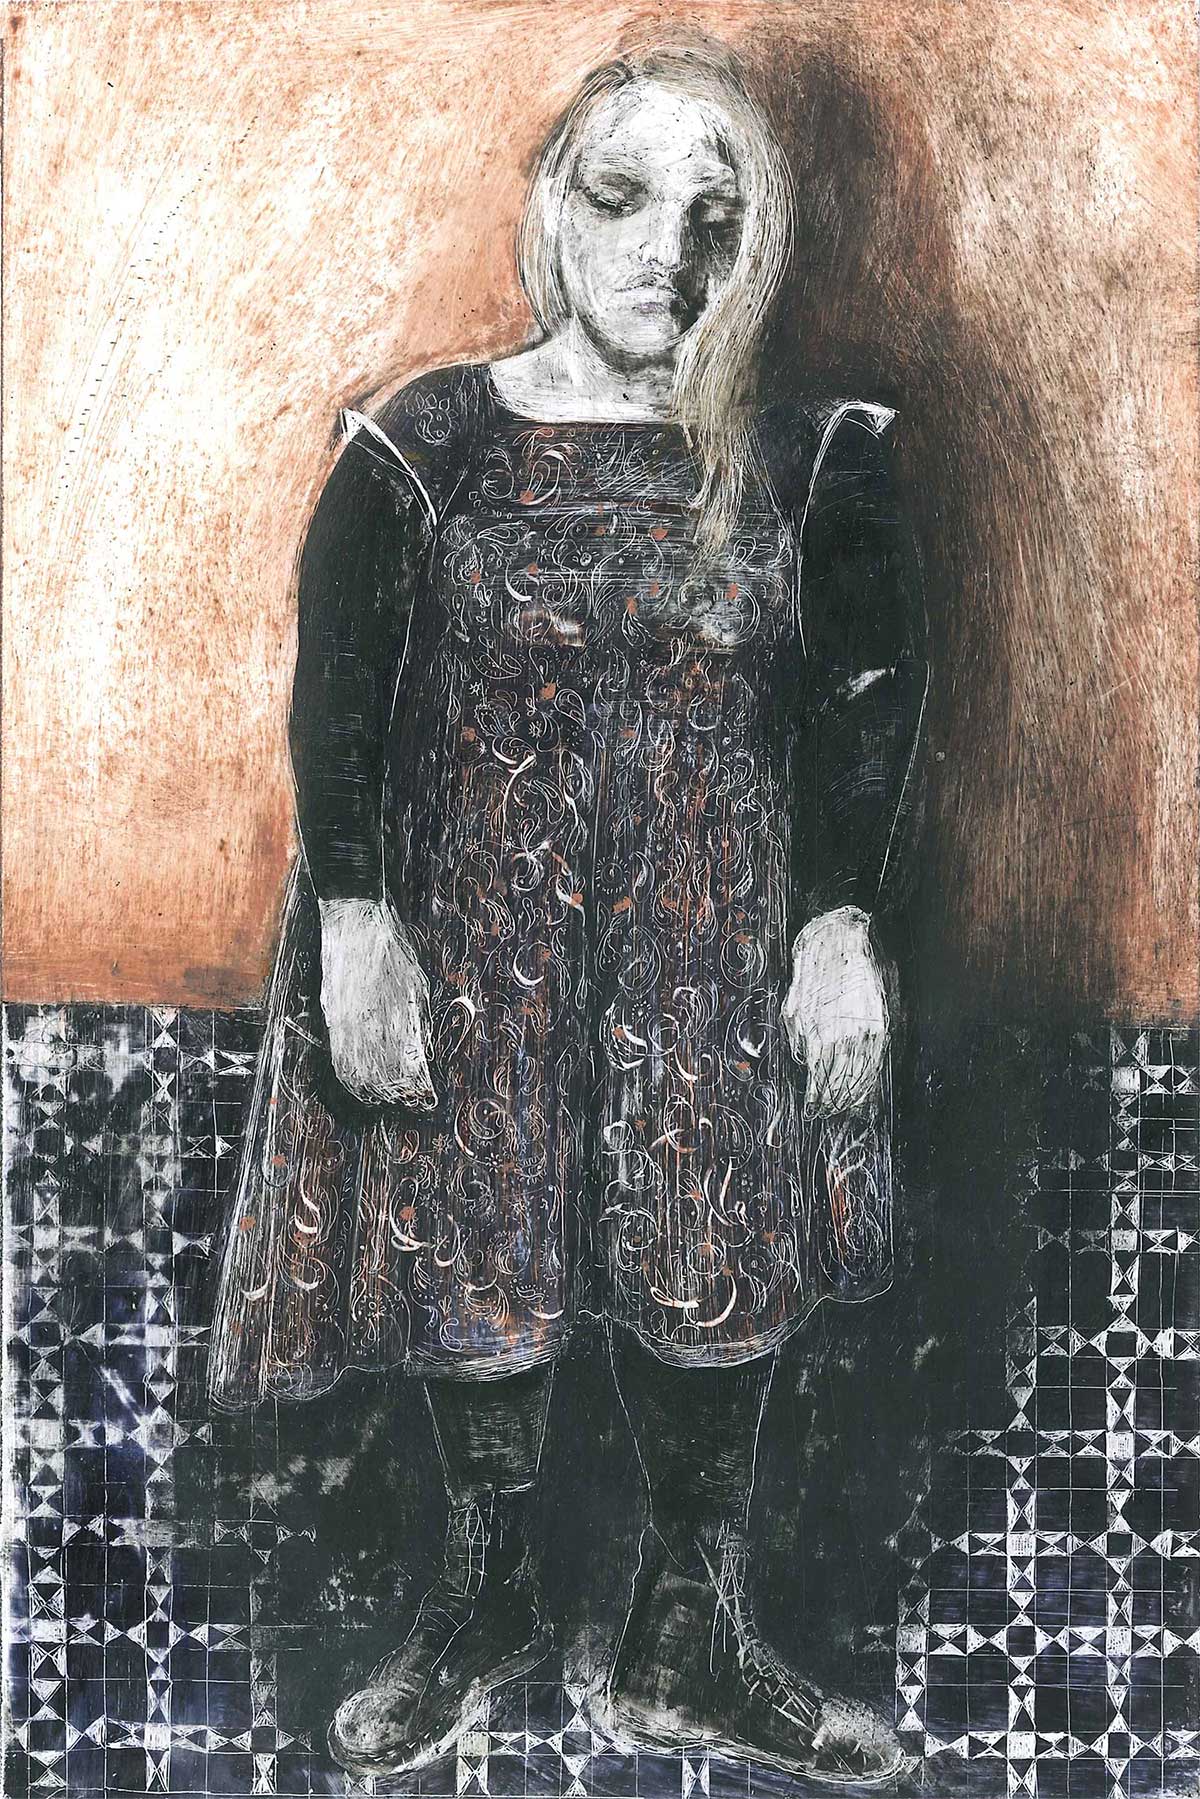 Vittoria, tecnica mista su carta, cm 21x14,5. (2015) - Debora Piccinini Artista